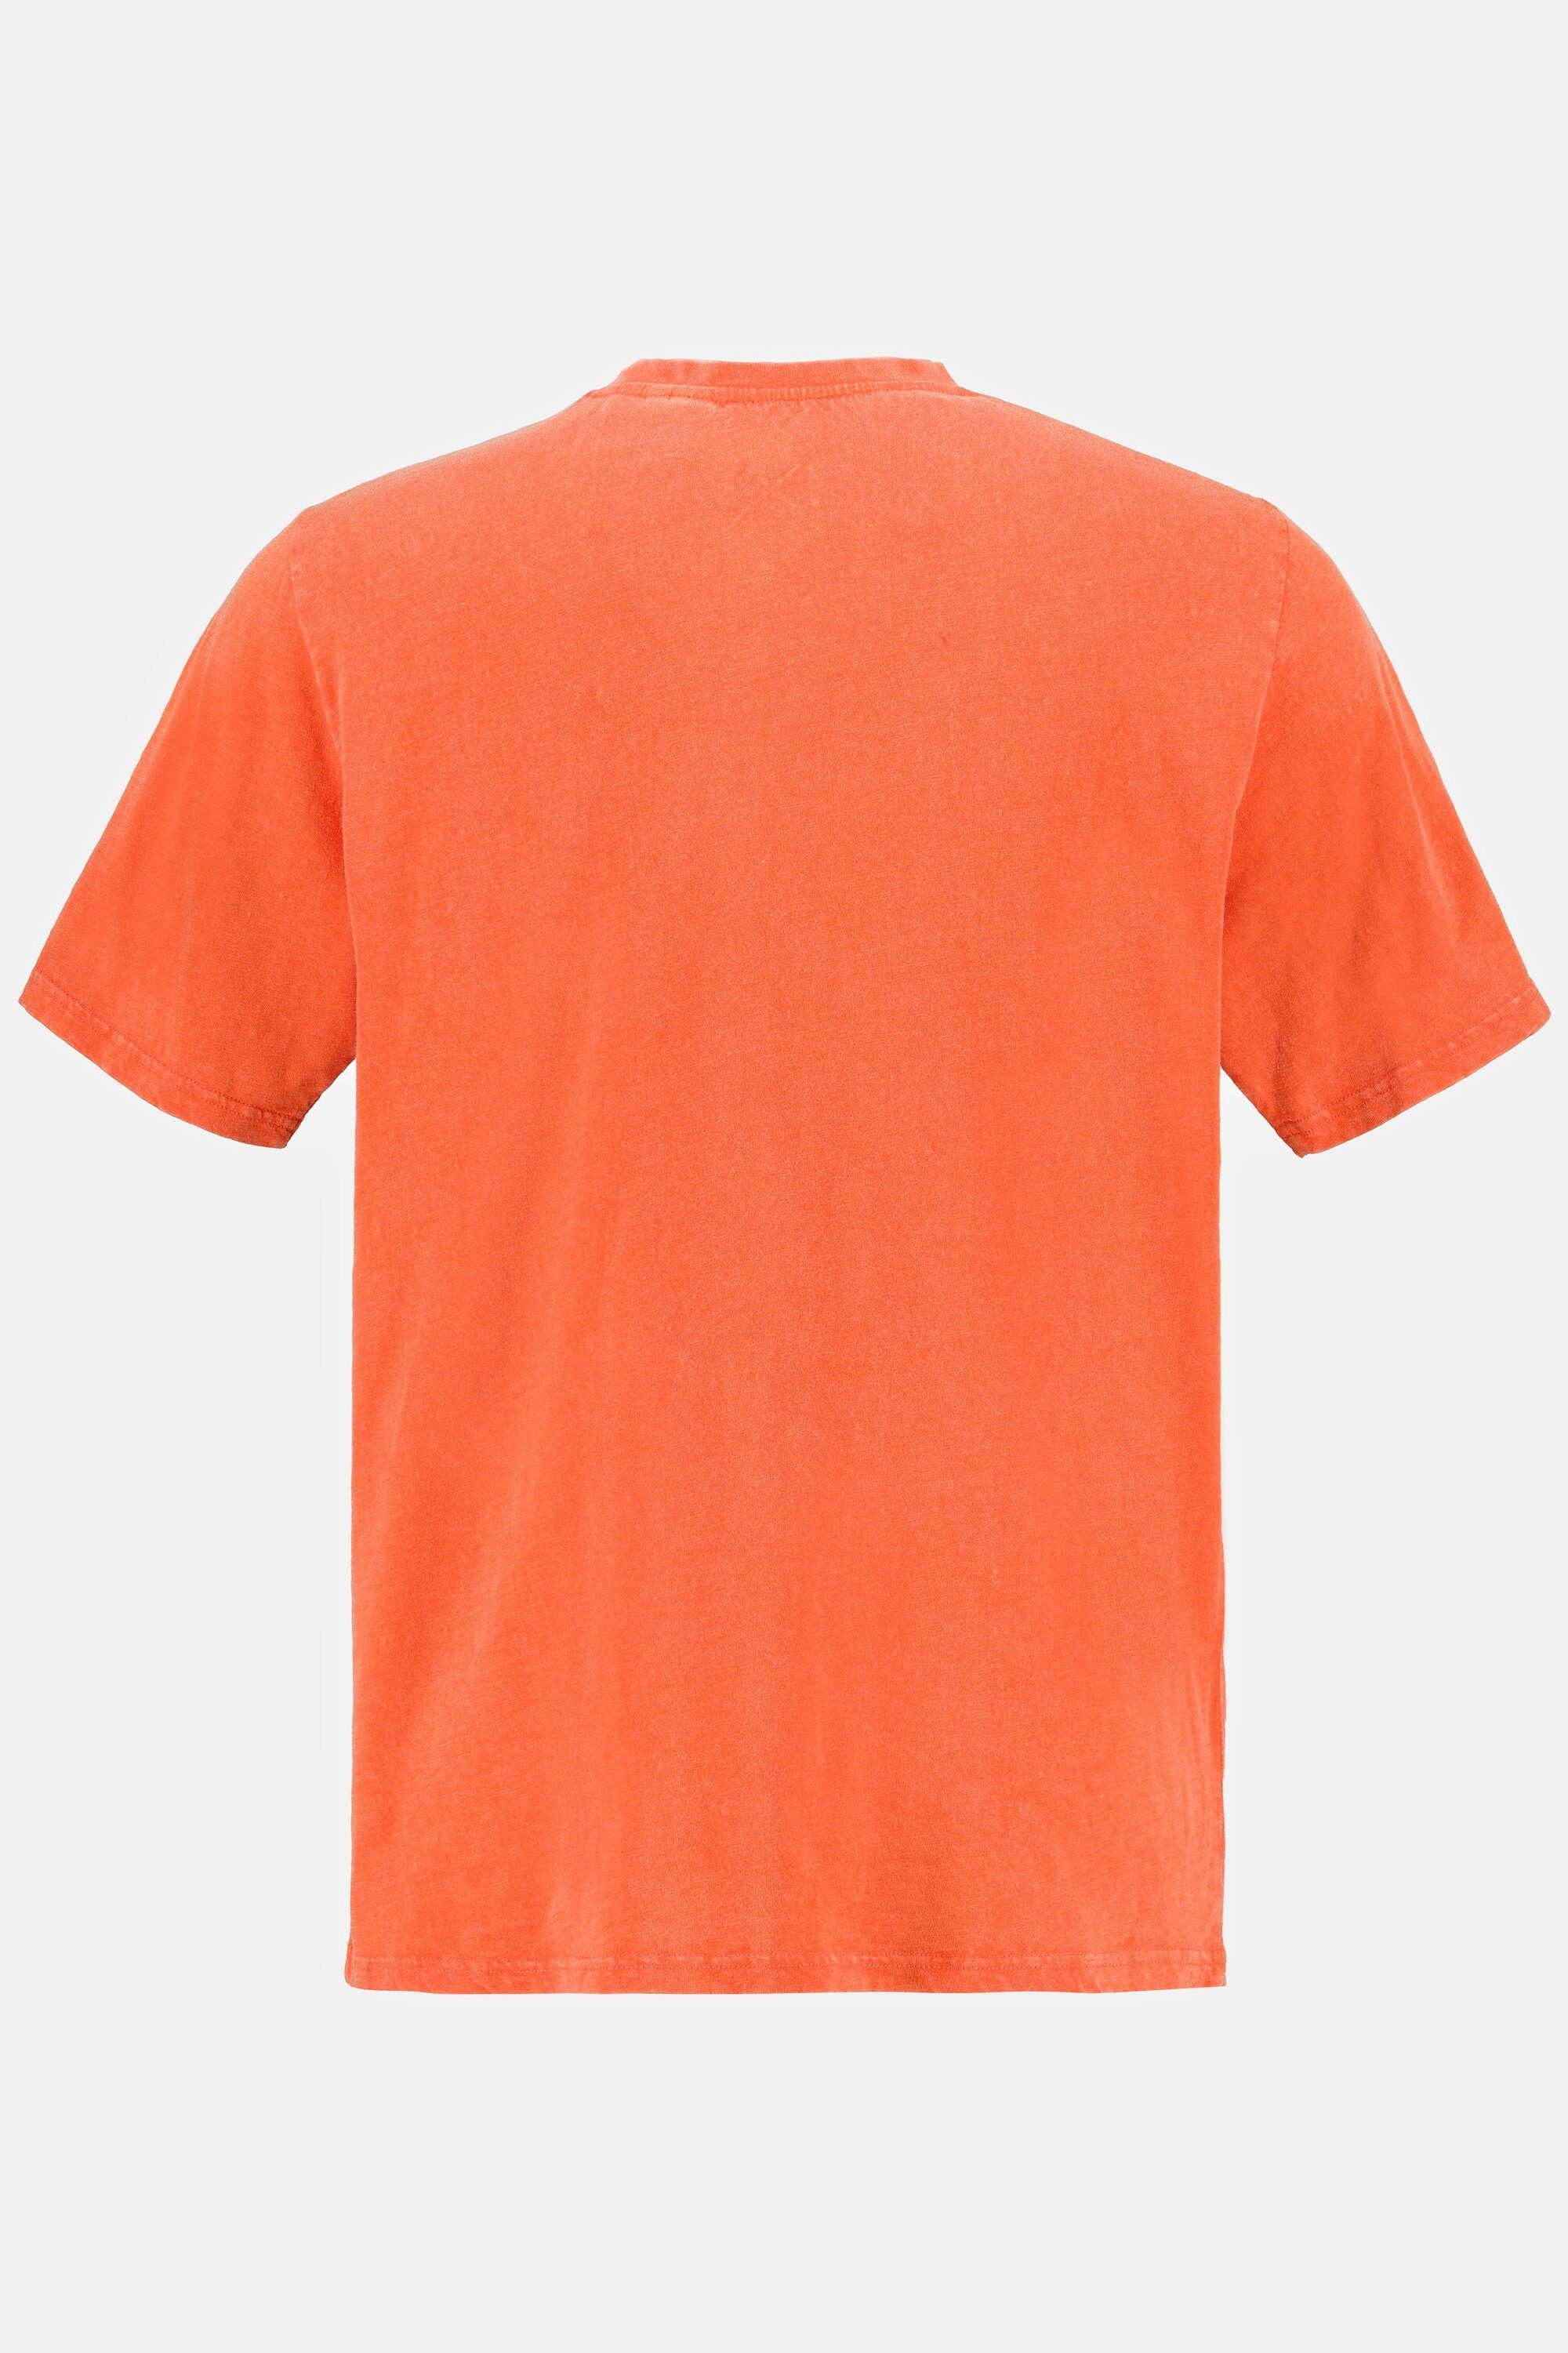 Flammjersey JP1880 Halbarm T-Shirt orange T-Shirt Look Vintage